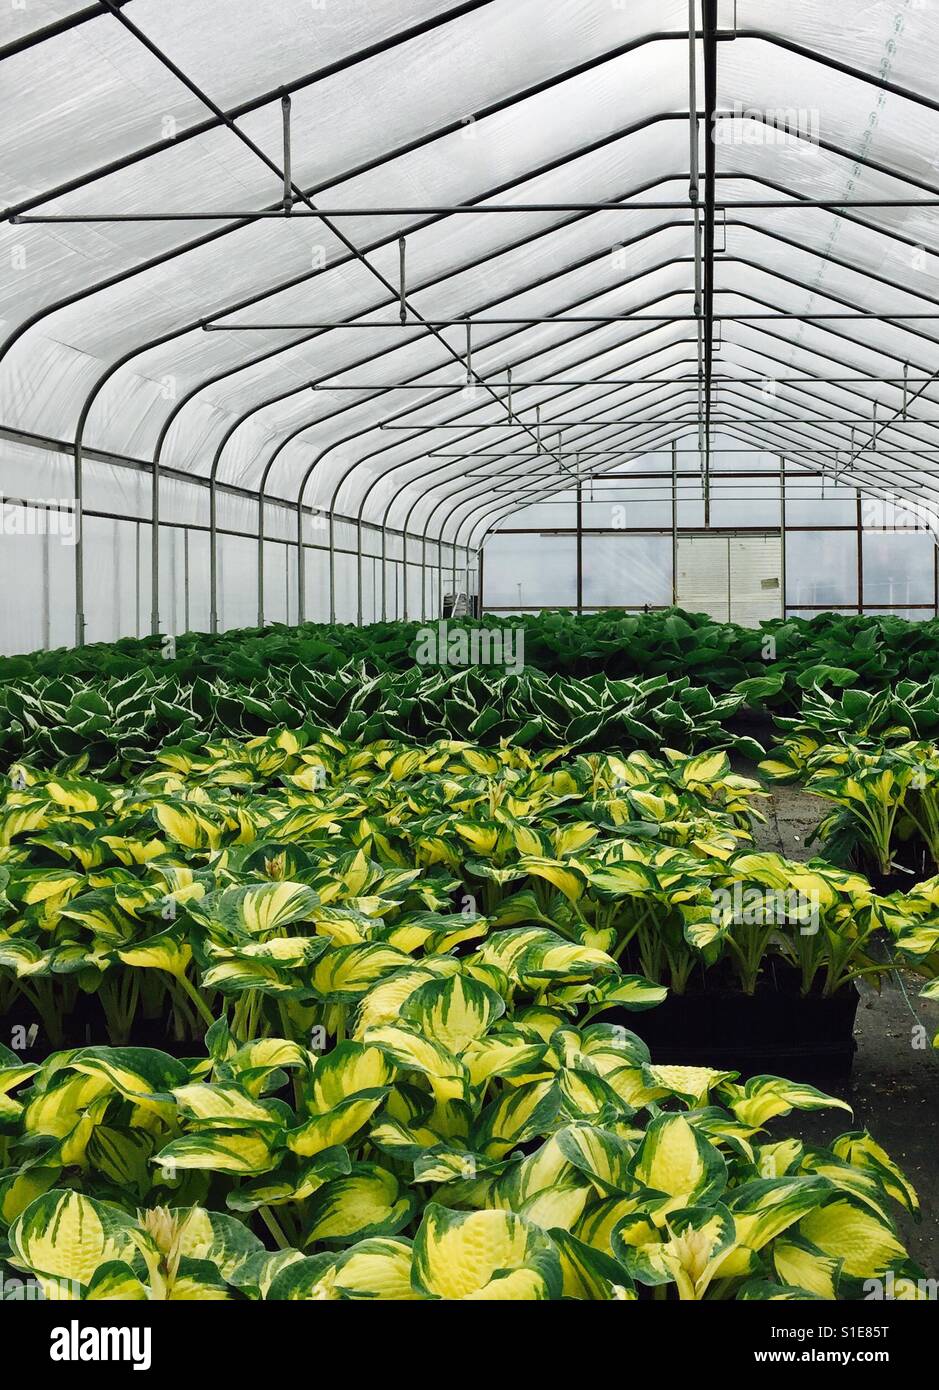 Greenhouse with hasta plants Stock Photo